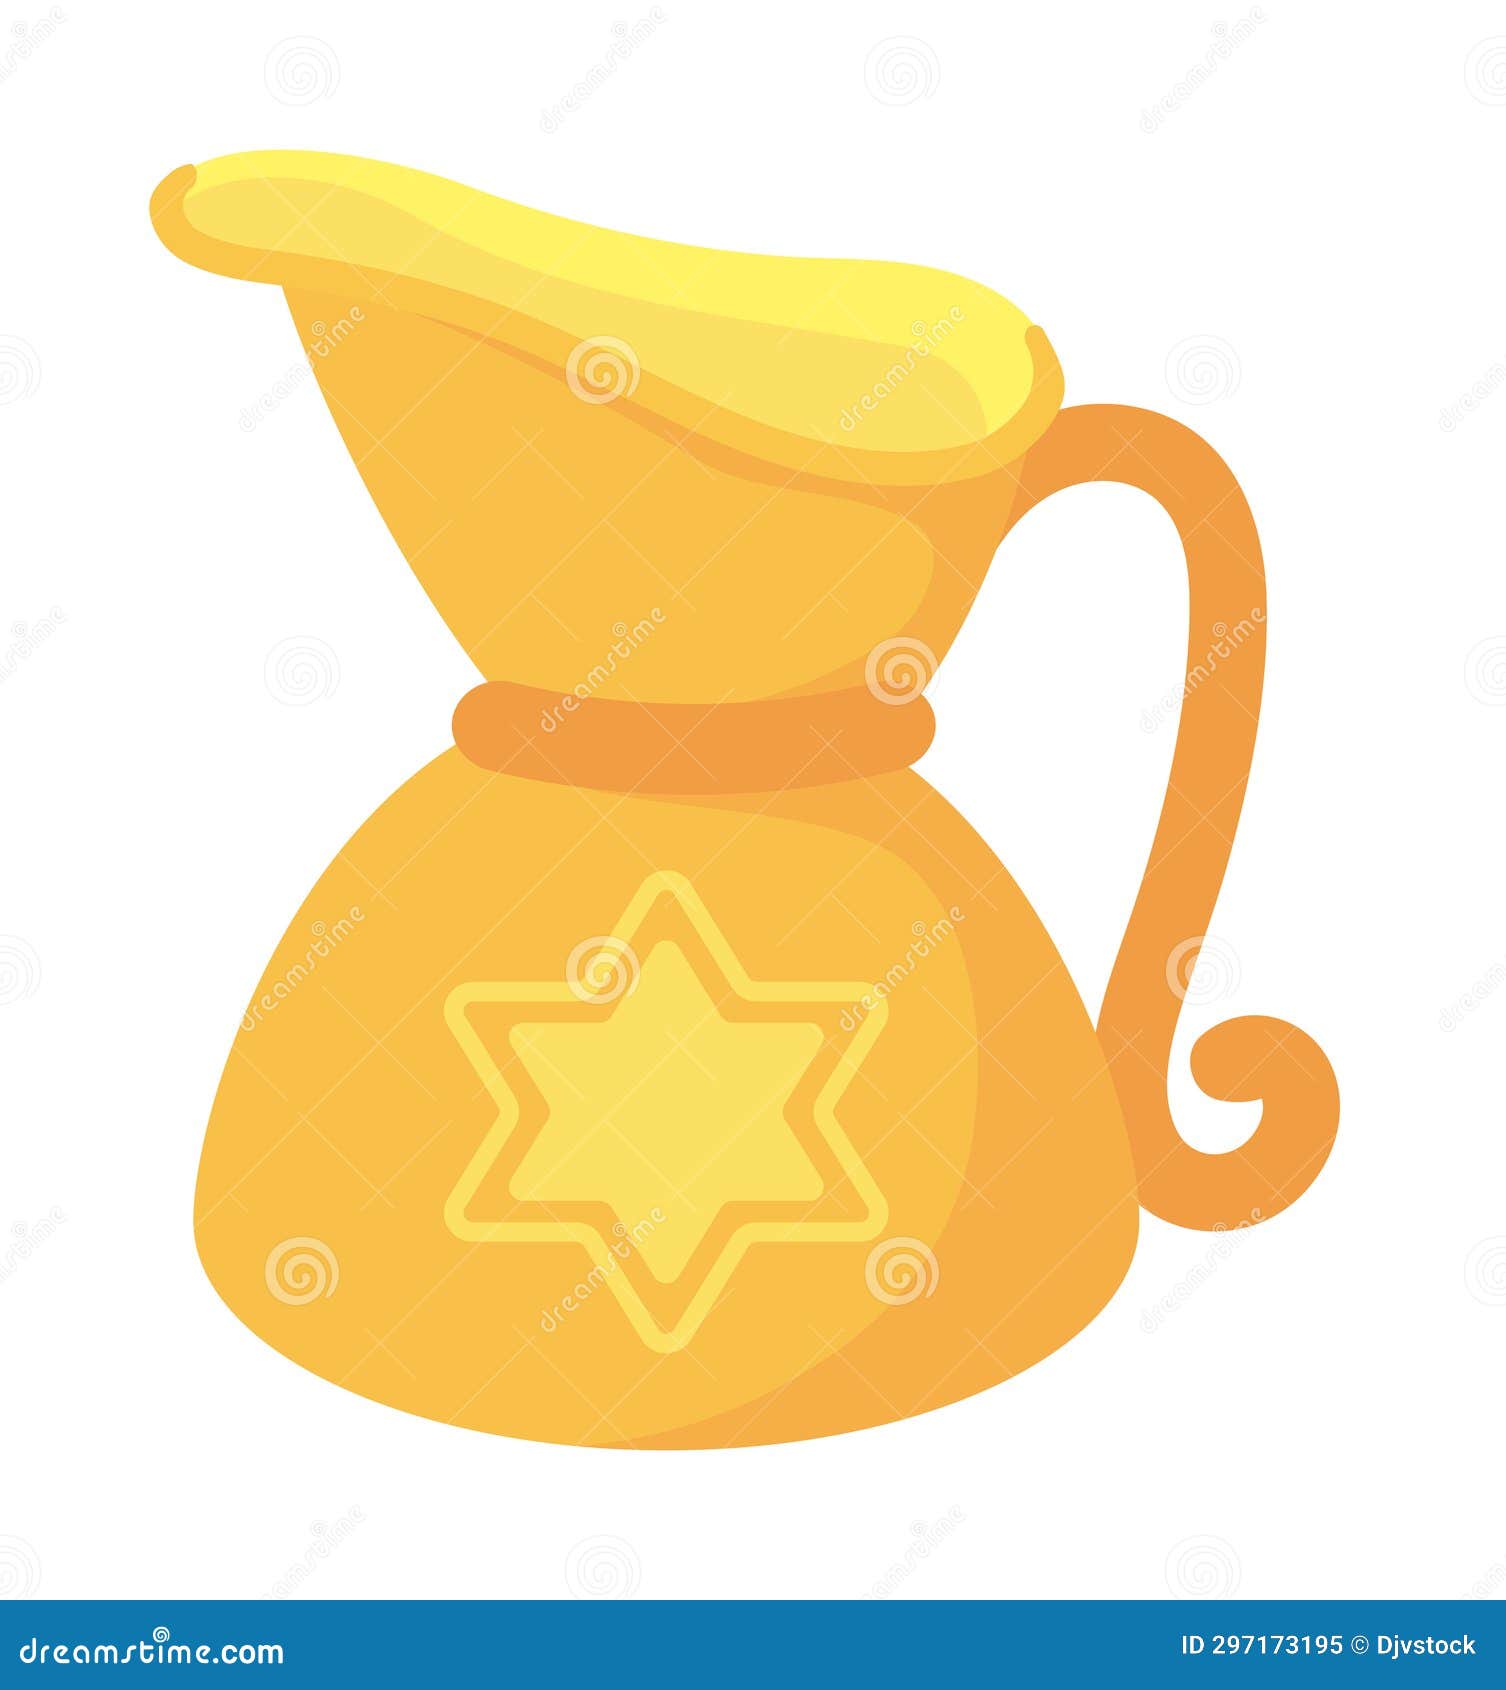 hanukkah clay vase